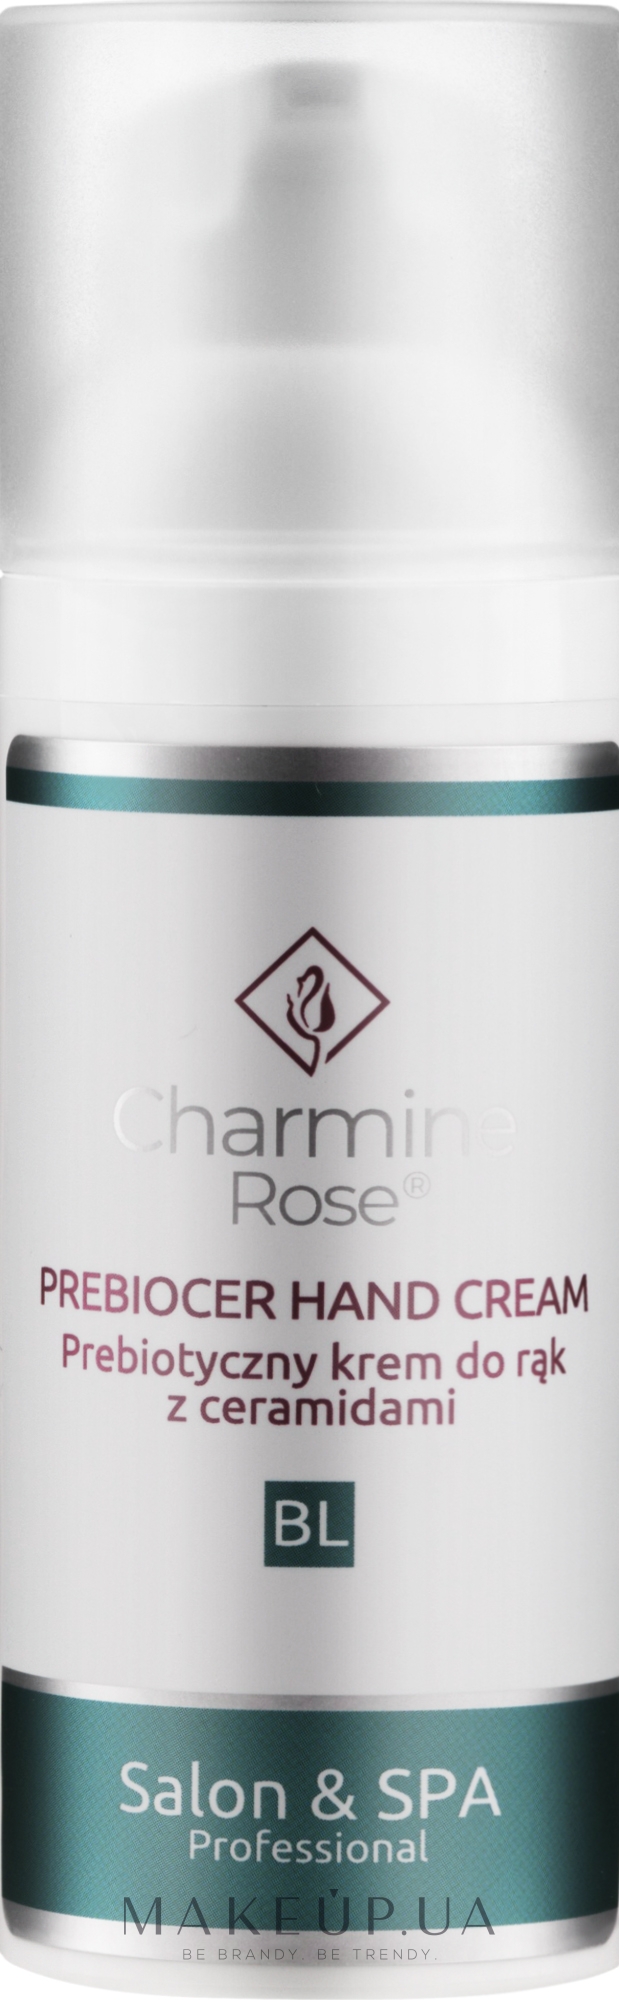 Пребиотический крем для рук с керамидами - Charmine Rose Prebiocer Hand Cream — фото 50ml